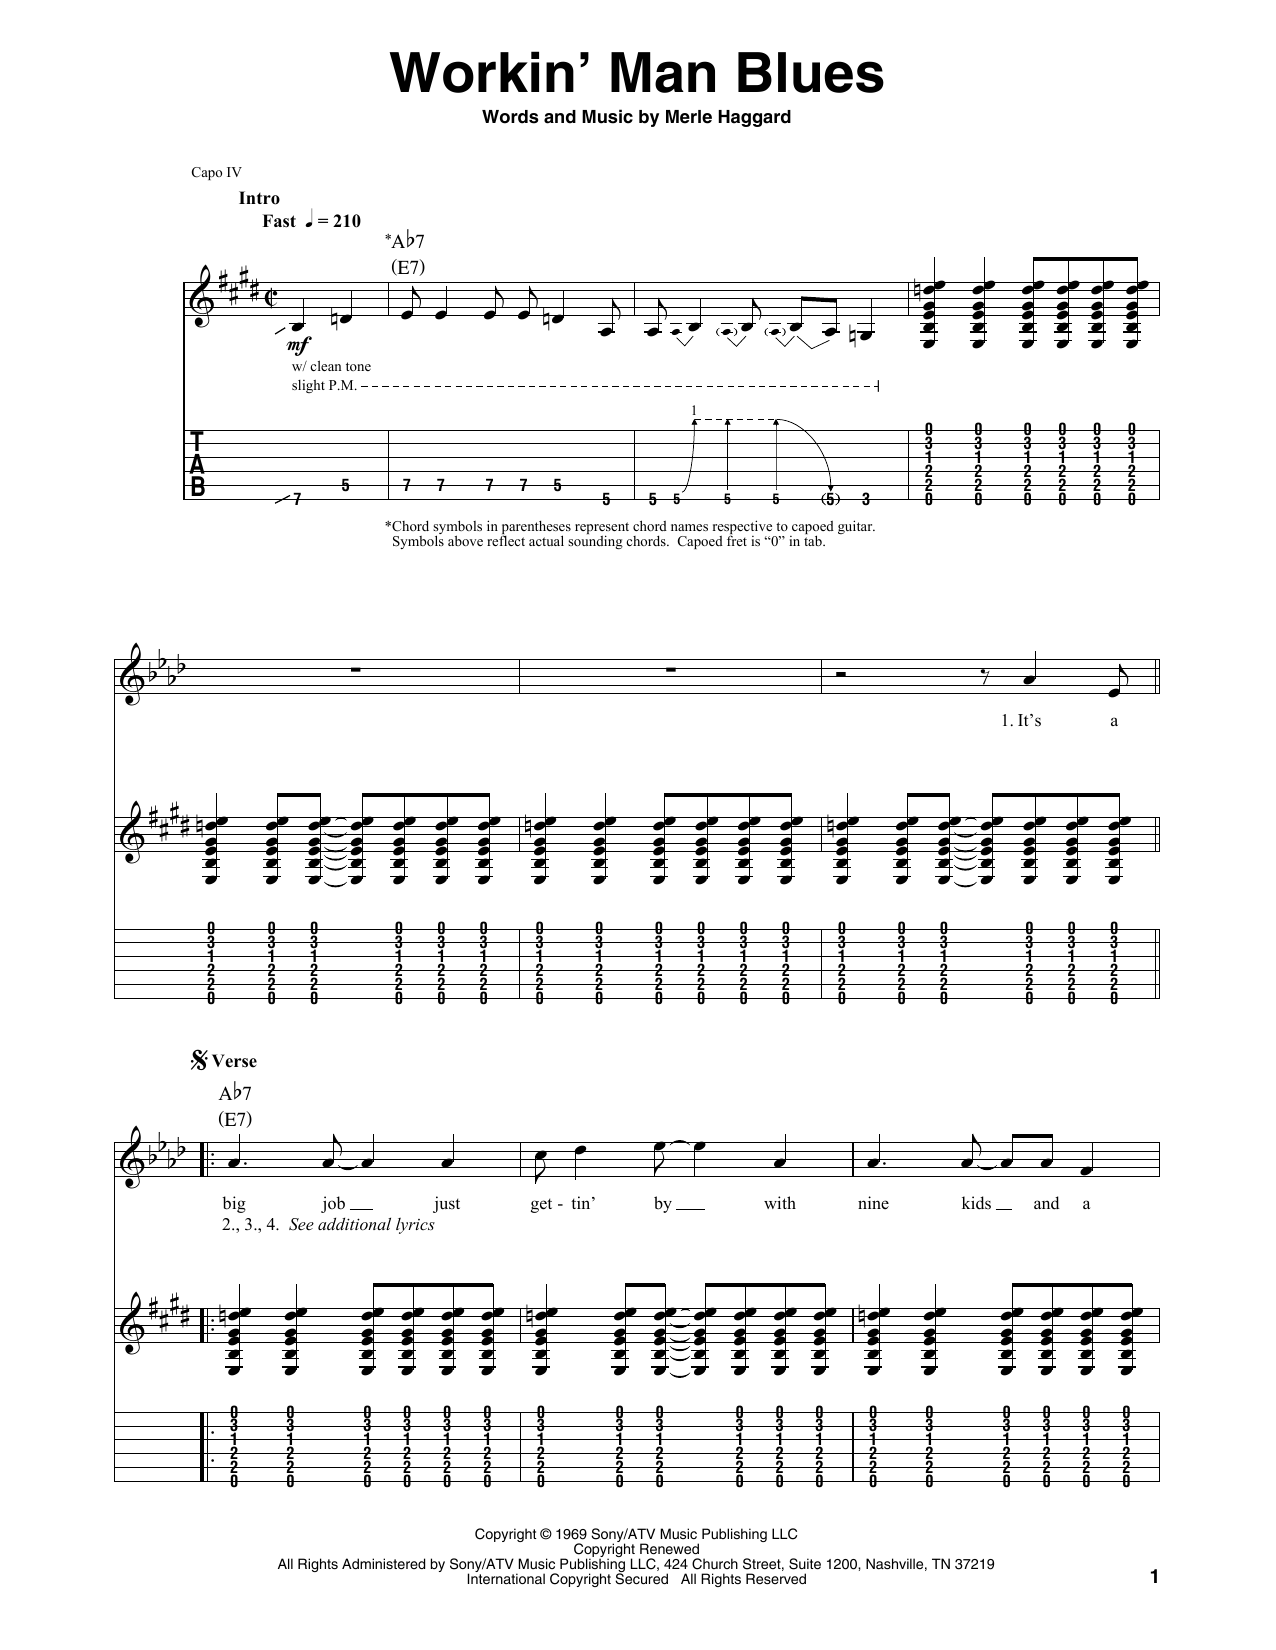 Merle Haggard Workin' Man Blues Sheet Music Notes & Chords for Guitar Tab Play-Along - Download or Print PDF